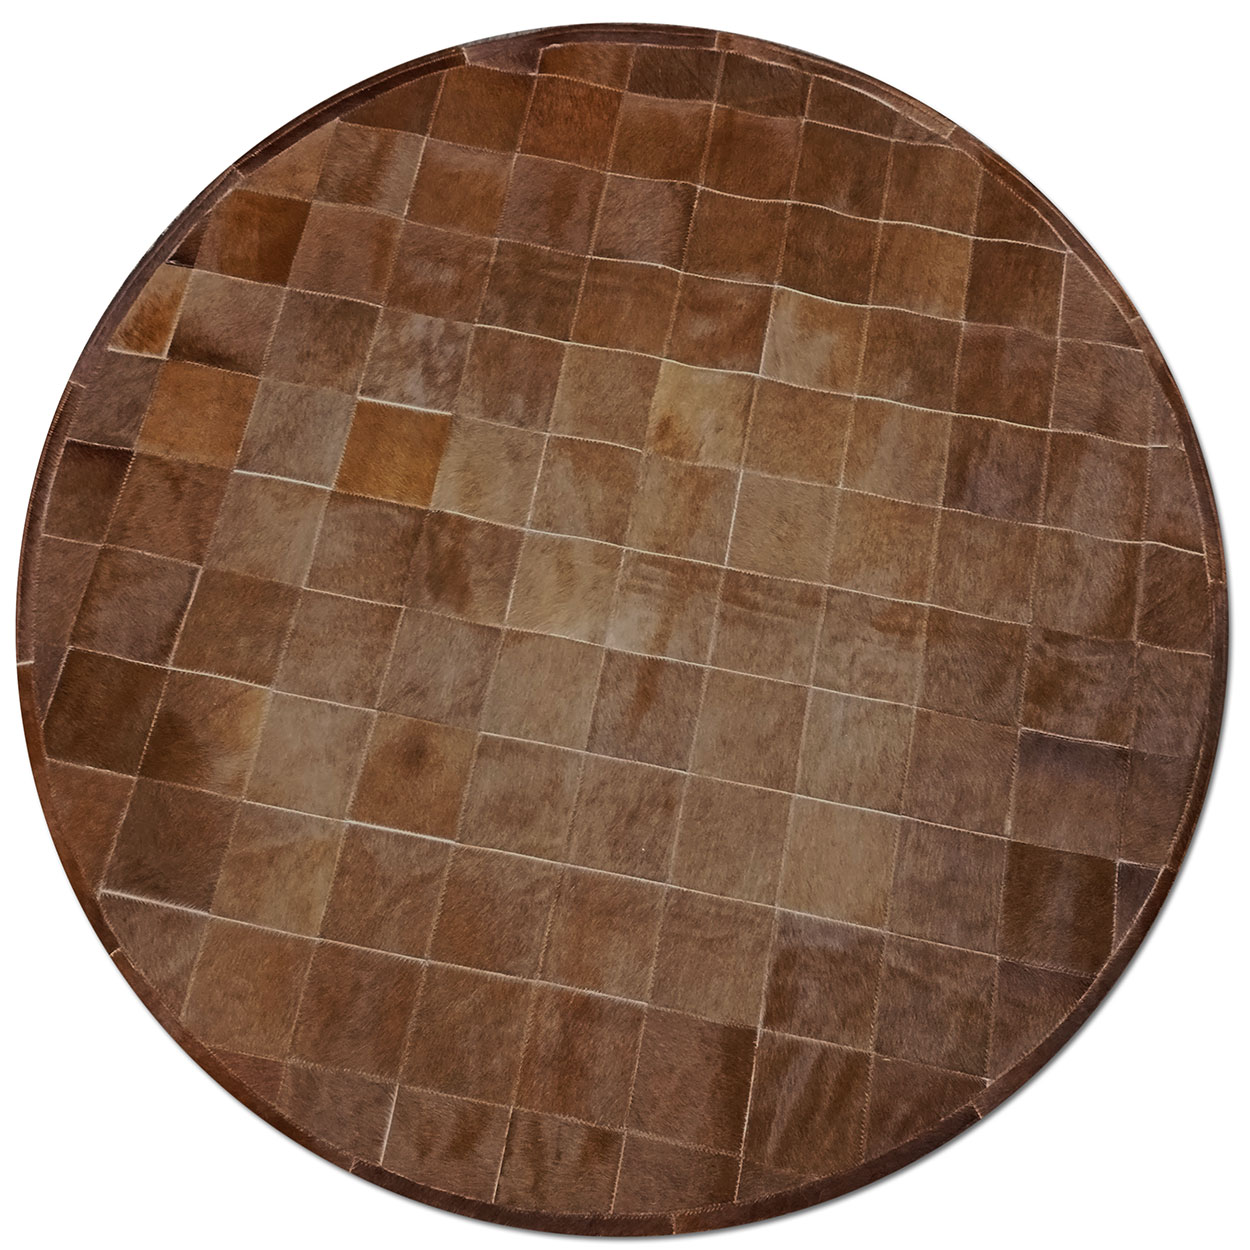 68in (5ft 8in) Diameter Round Designer-Quality Cowhide Patchwork Rug - 6in Squares in Solid Medium Brown -stk